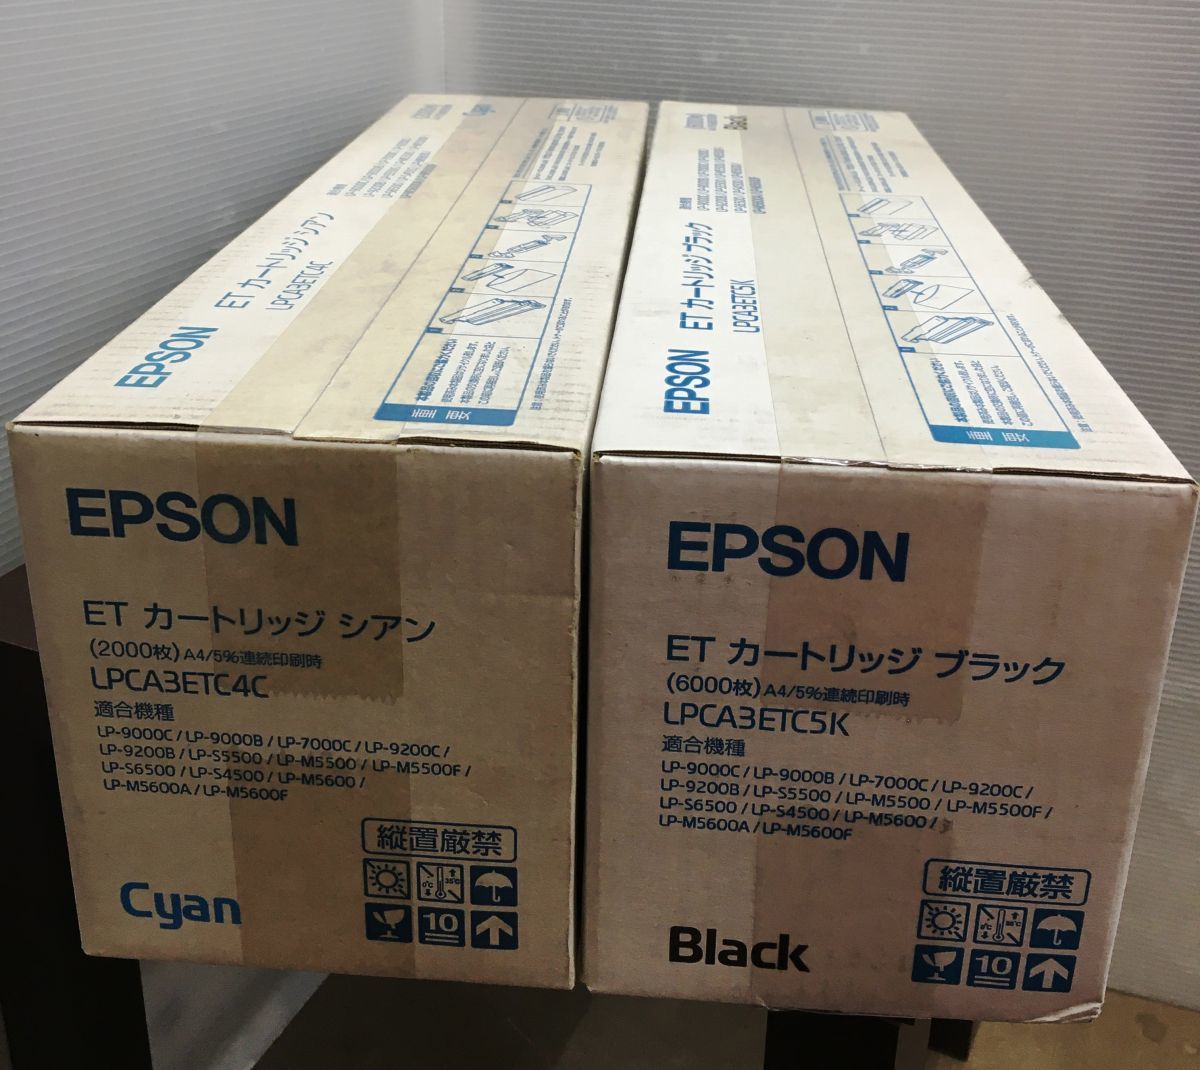  Epson ET cartridge LPCA3ETC4C/ LPCA3ETC5K 2 pcs set unused goods Cyan / black use time limit unknown EPSON